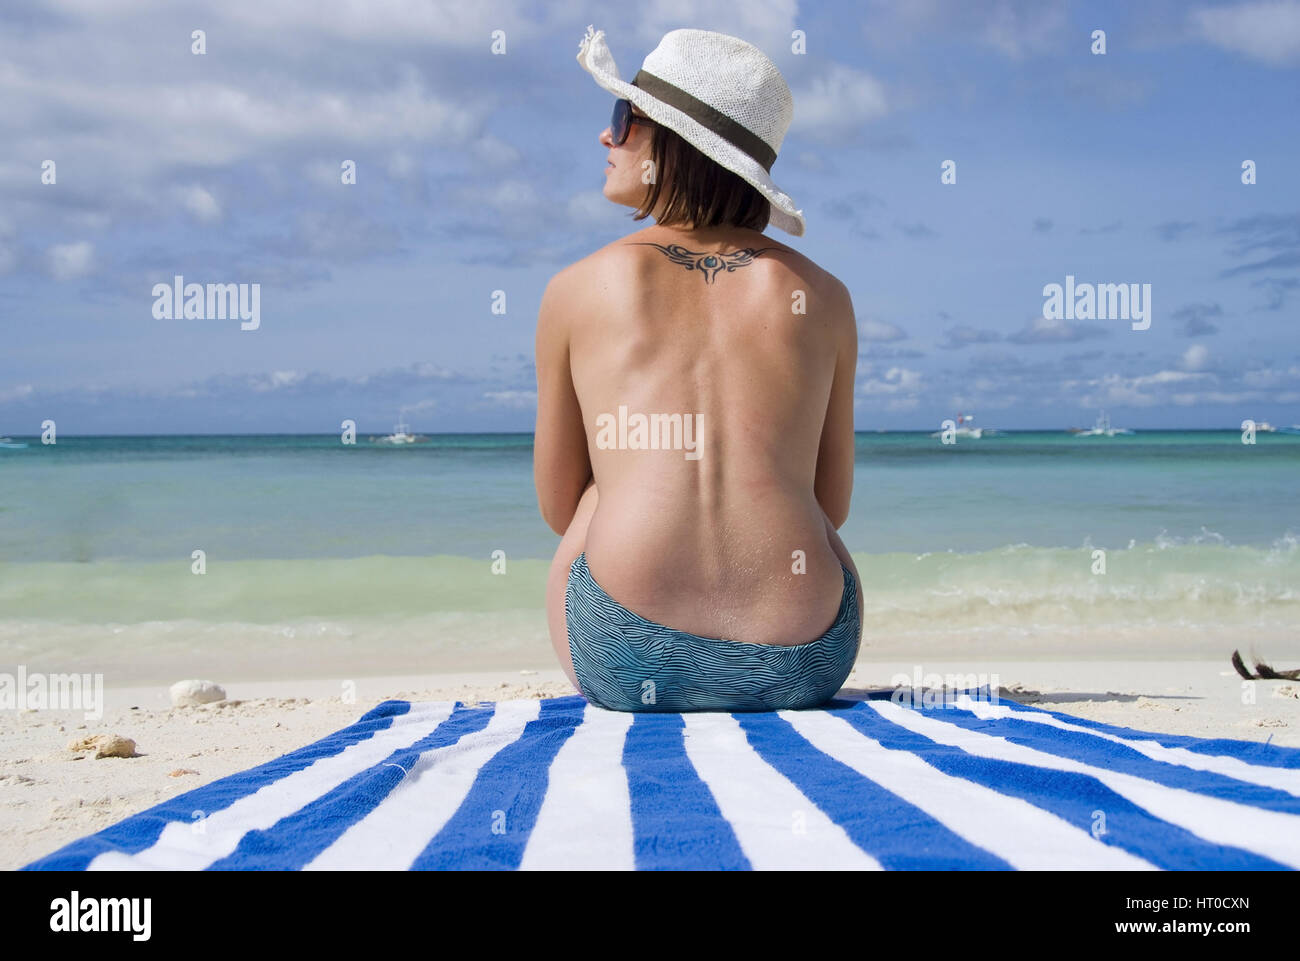 Junge Frau sitzt oben ohne am Strand - woman on the beach Stock Photo - Ala...